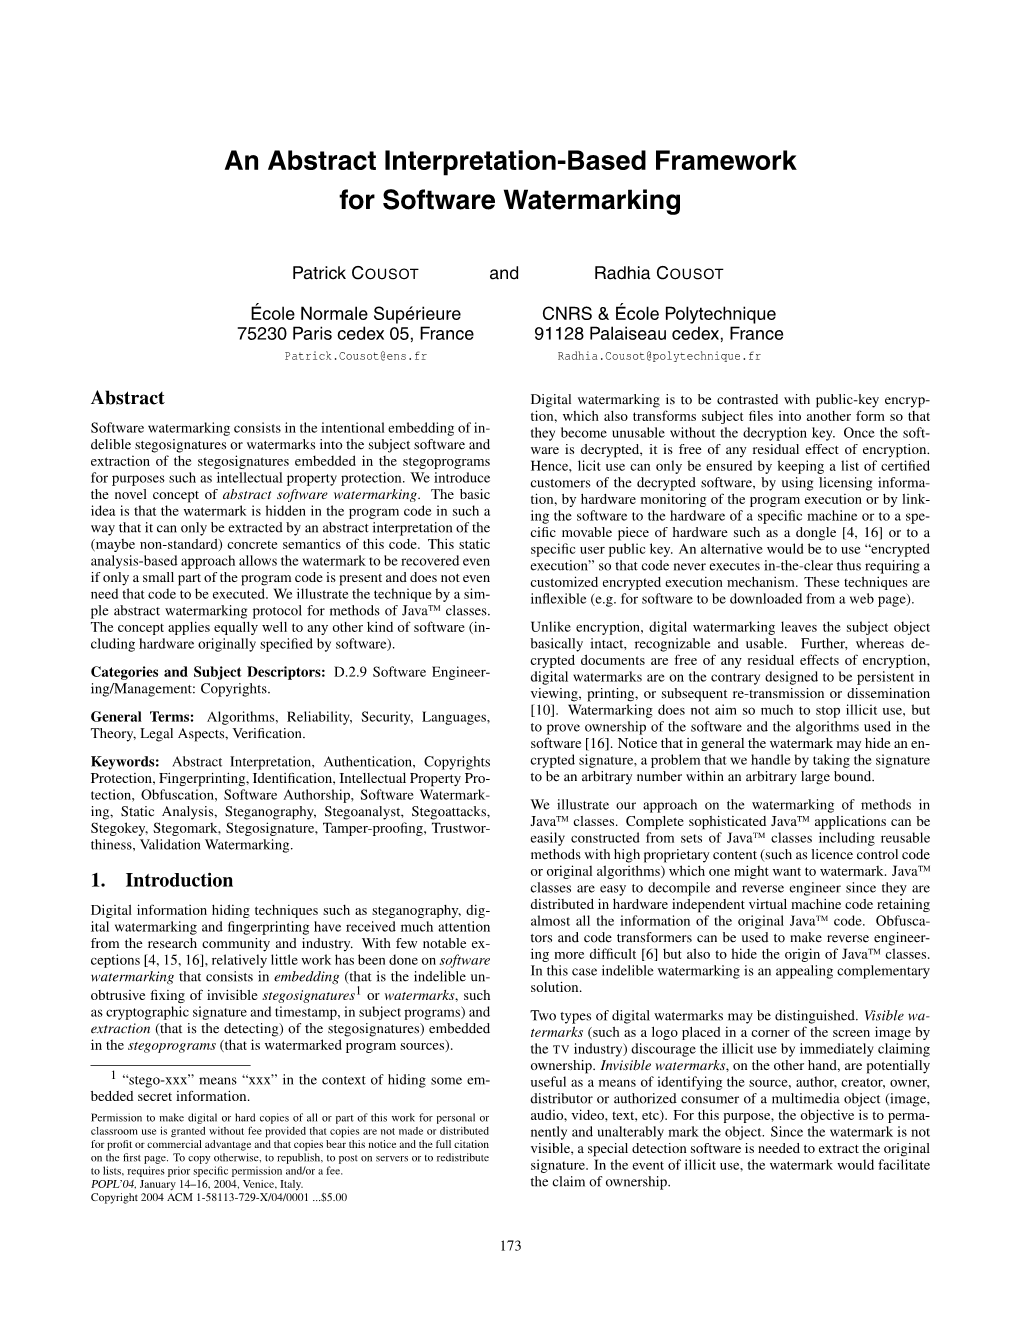 An Abstract Interpretation-Based Framework for Software Watermarking